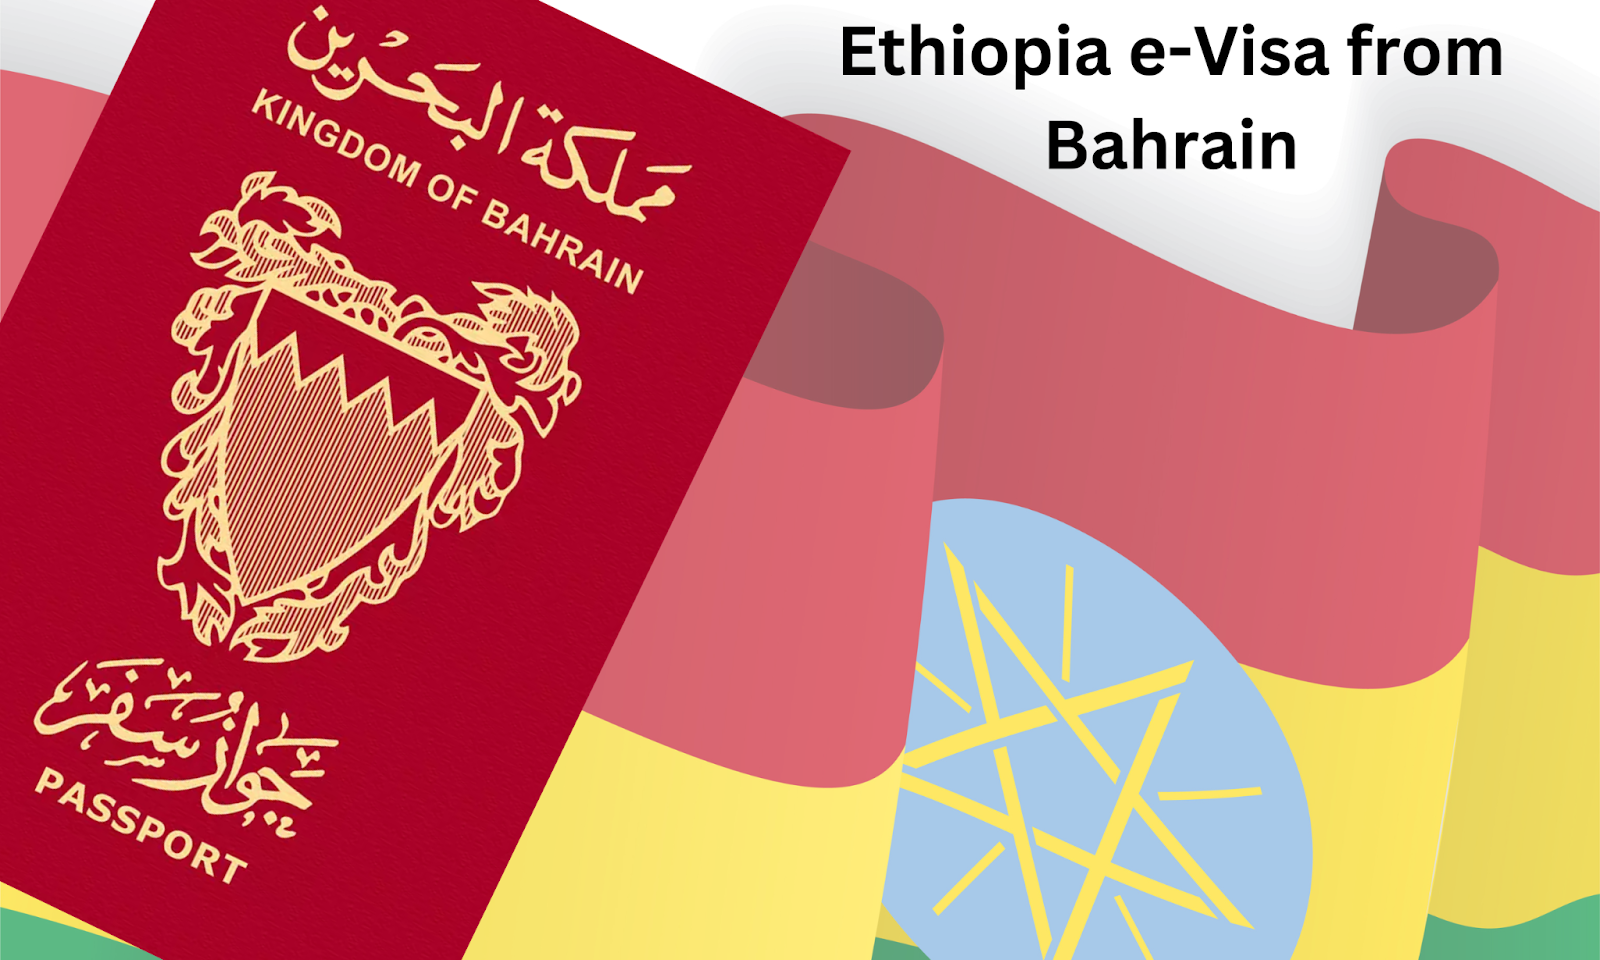 Ethiopia e-Visa from Bahrain